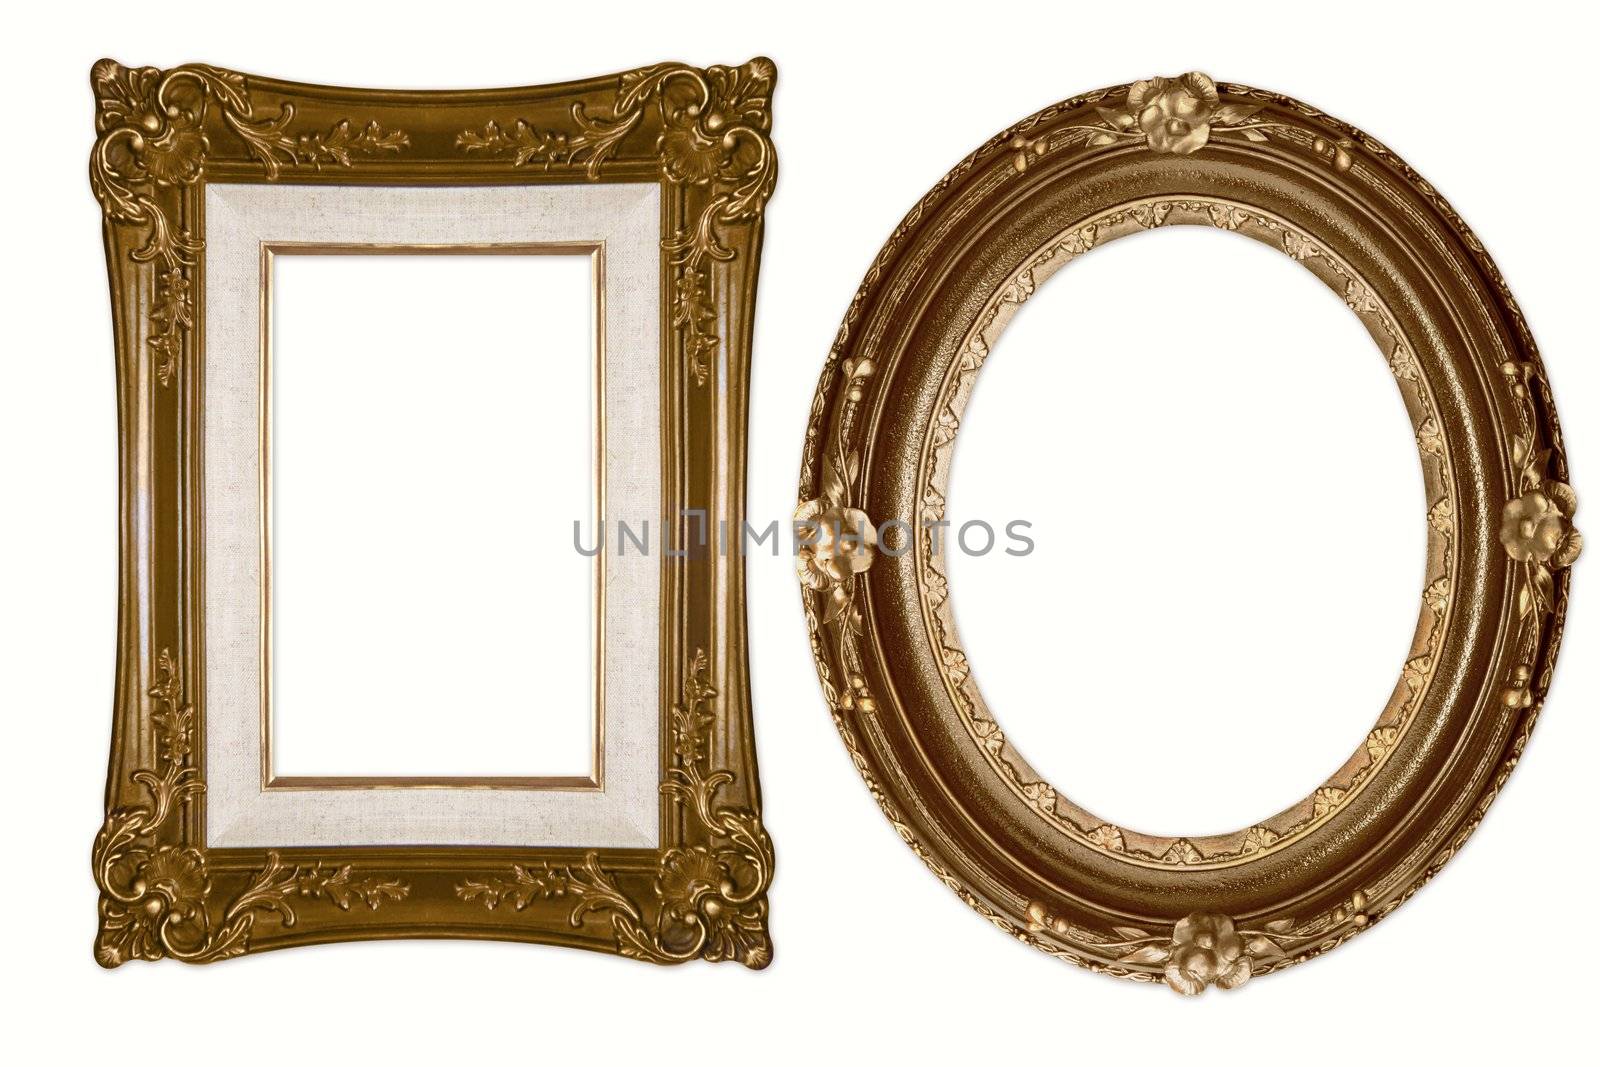 Oval and Rectangular Decorative Golden Frames by tobkatrina